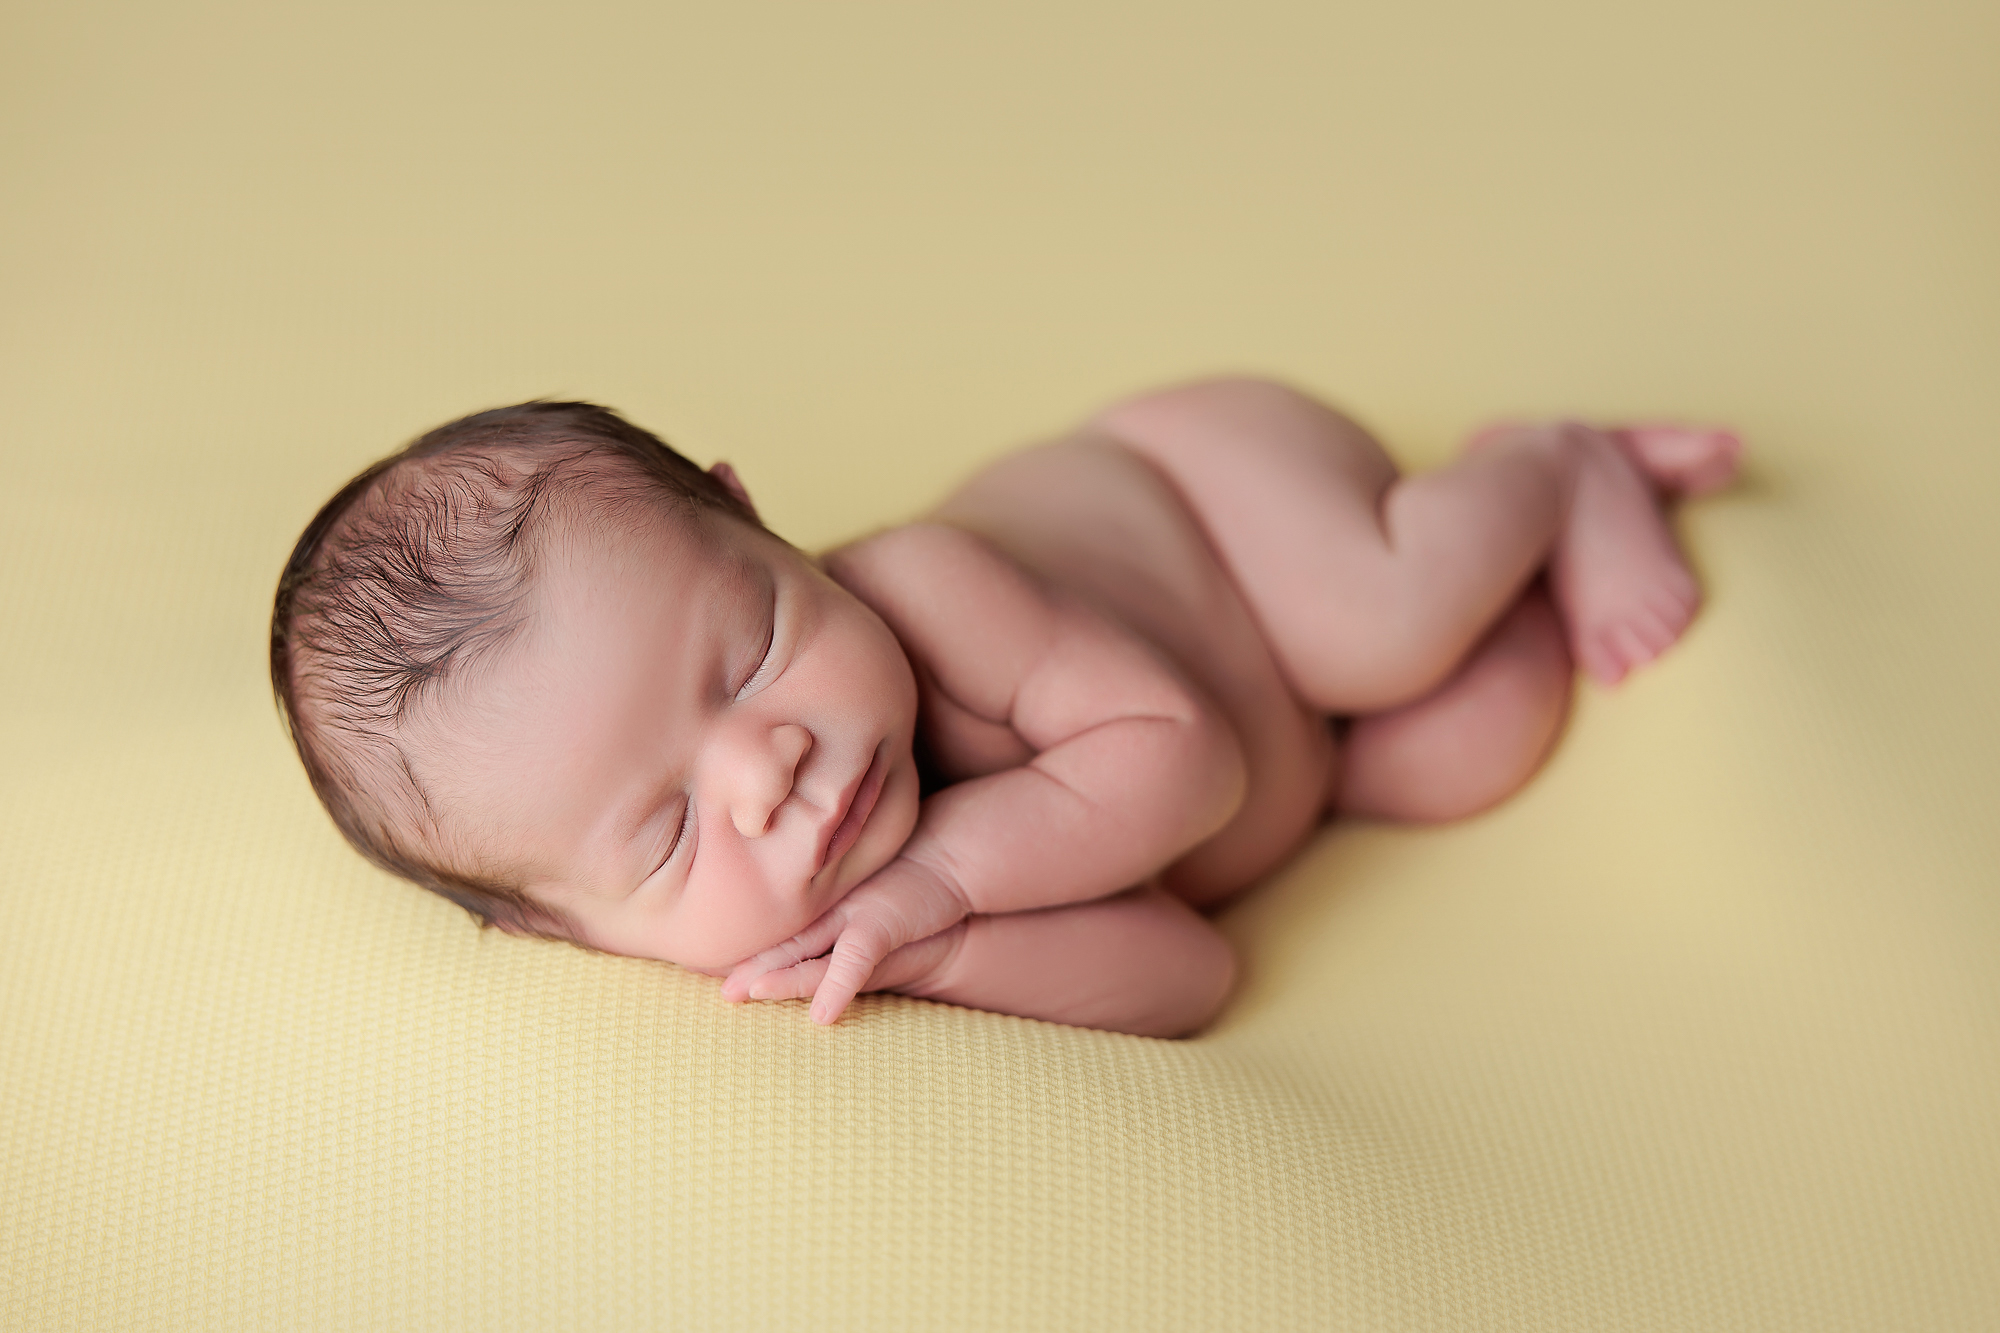 newborn baby boy sleeping on a yellow blanket